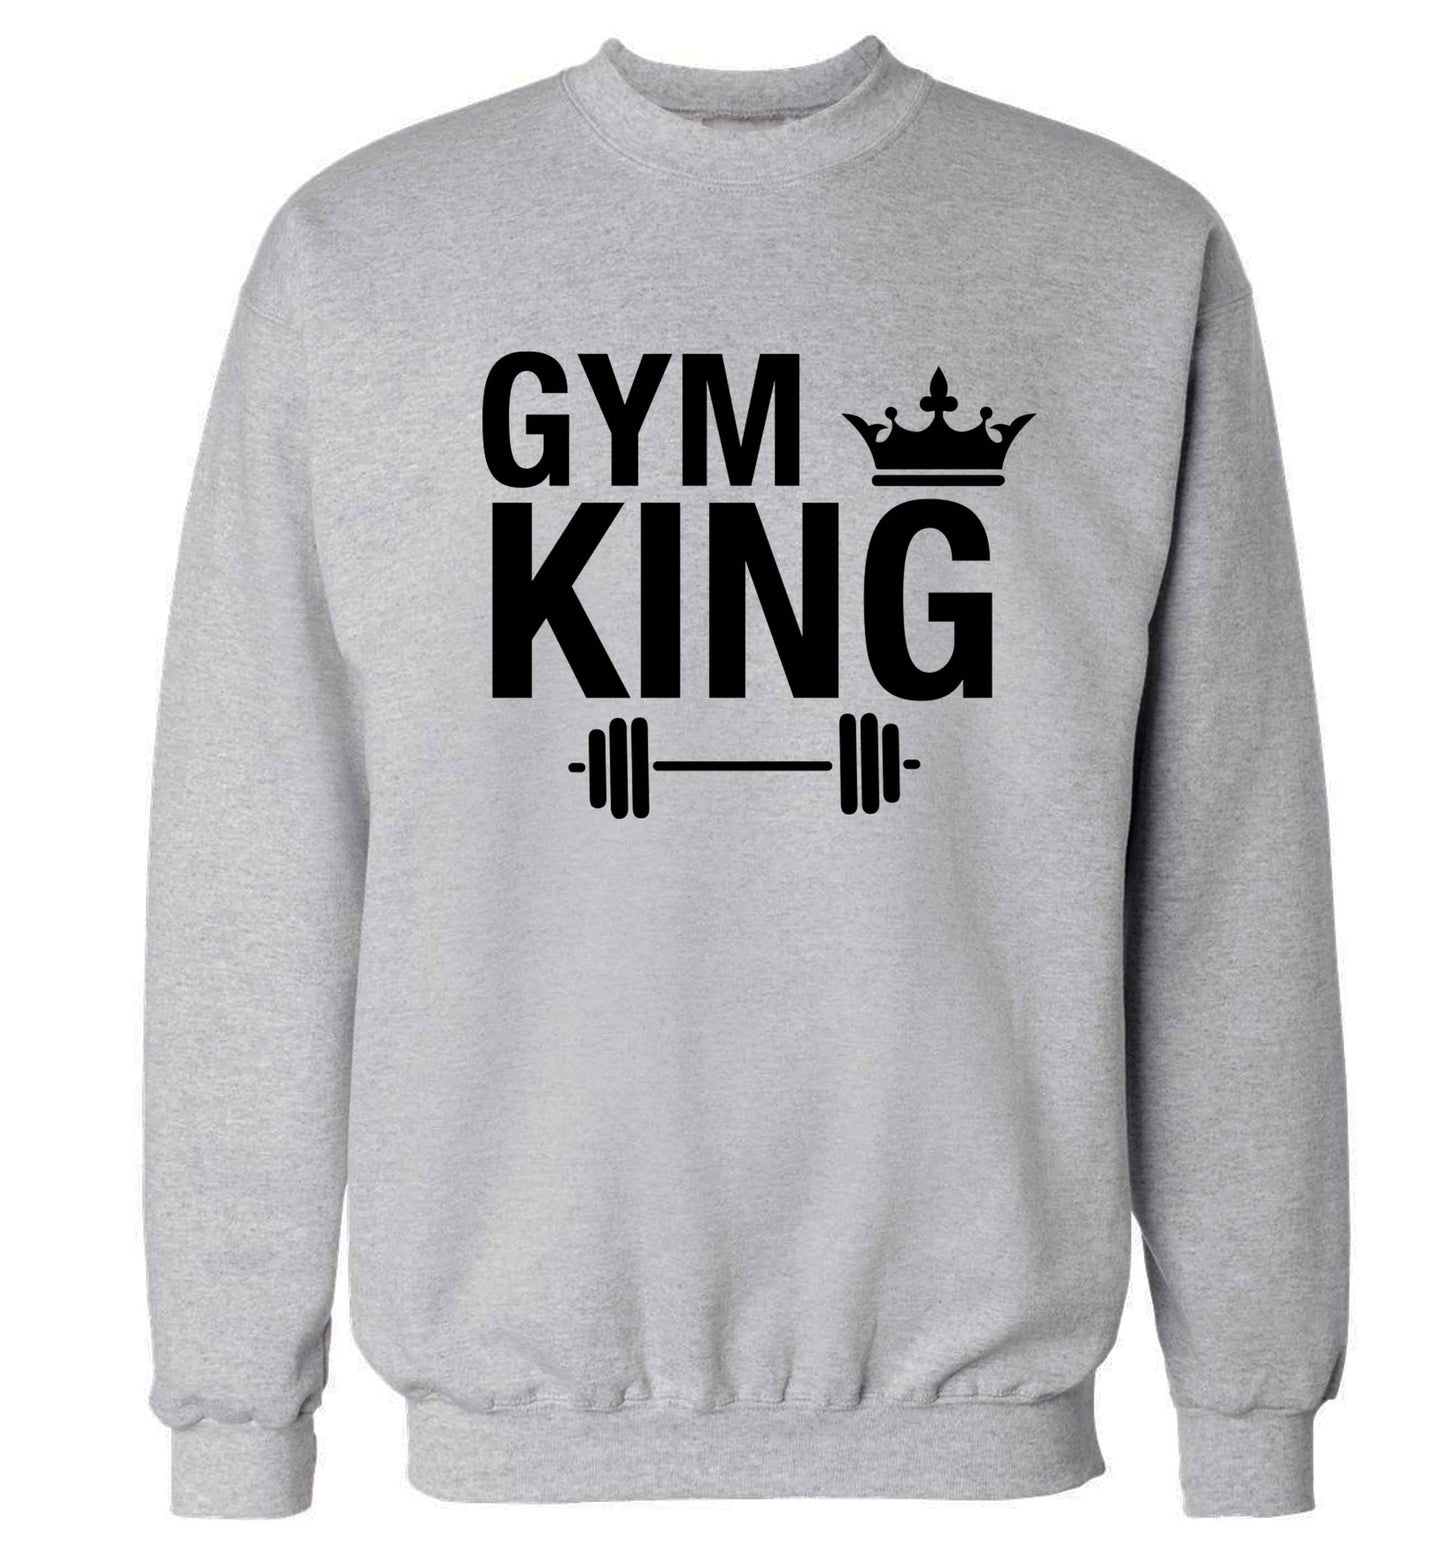 Gym king Adult's unisex grey Sweater 2XL